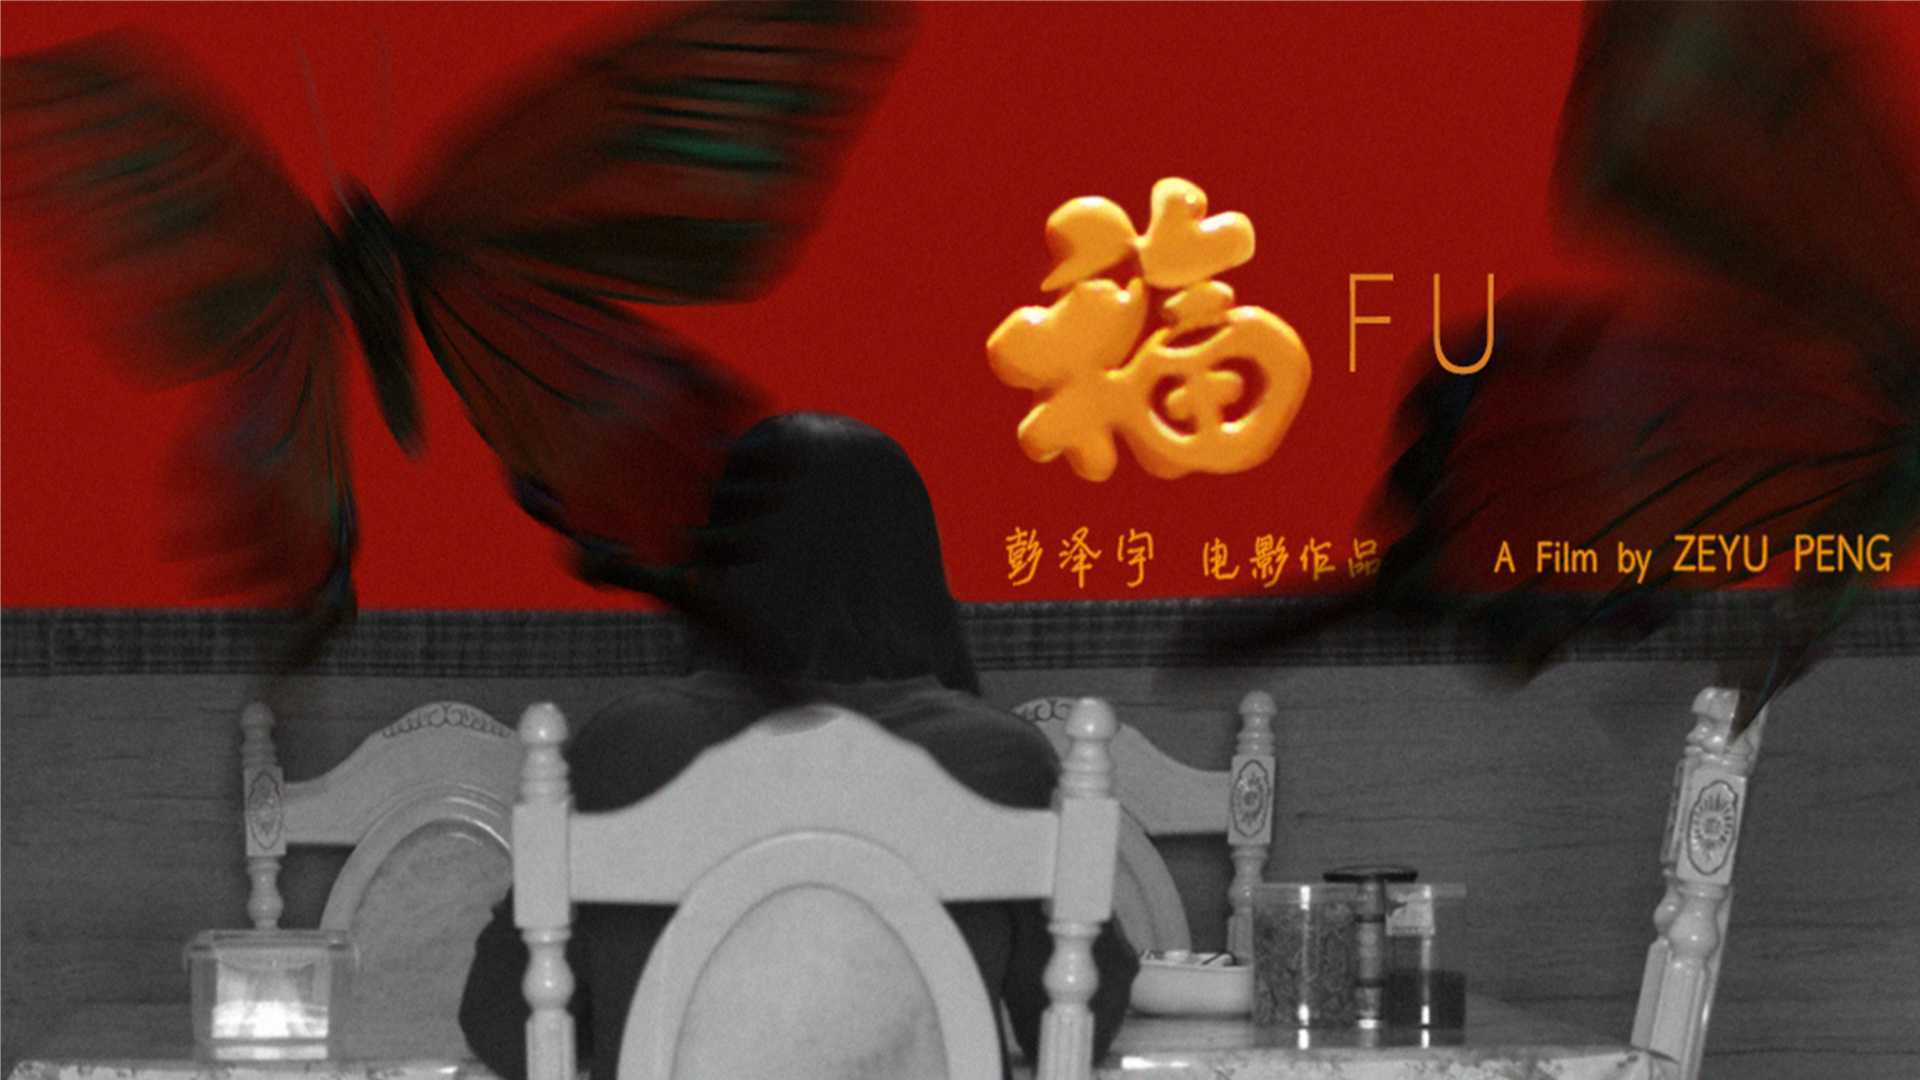 电影《福》预告片 “FU” Official Trailer